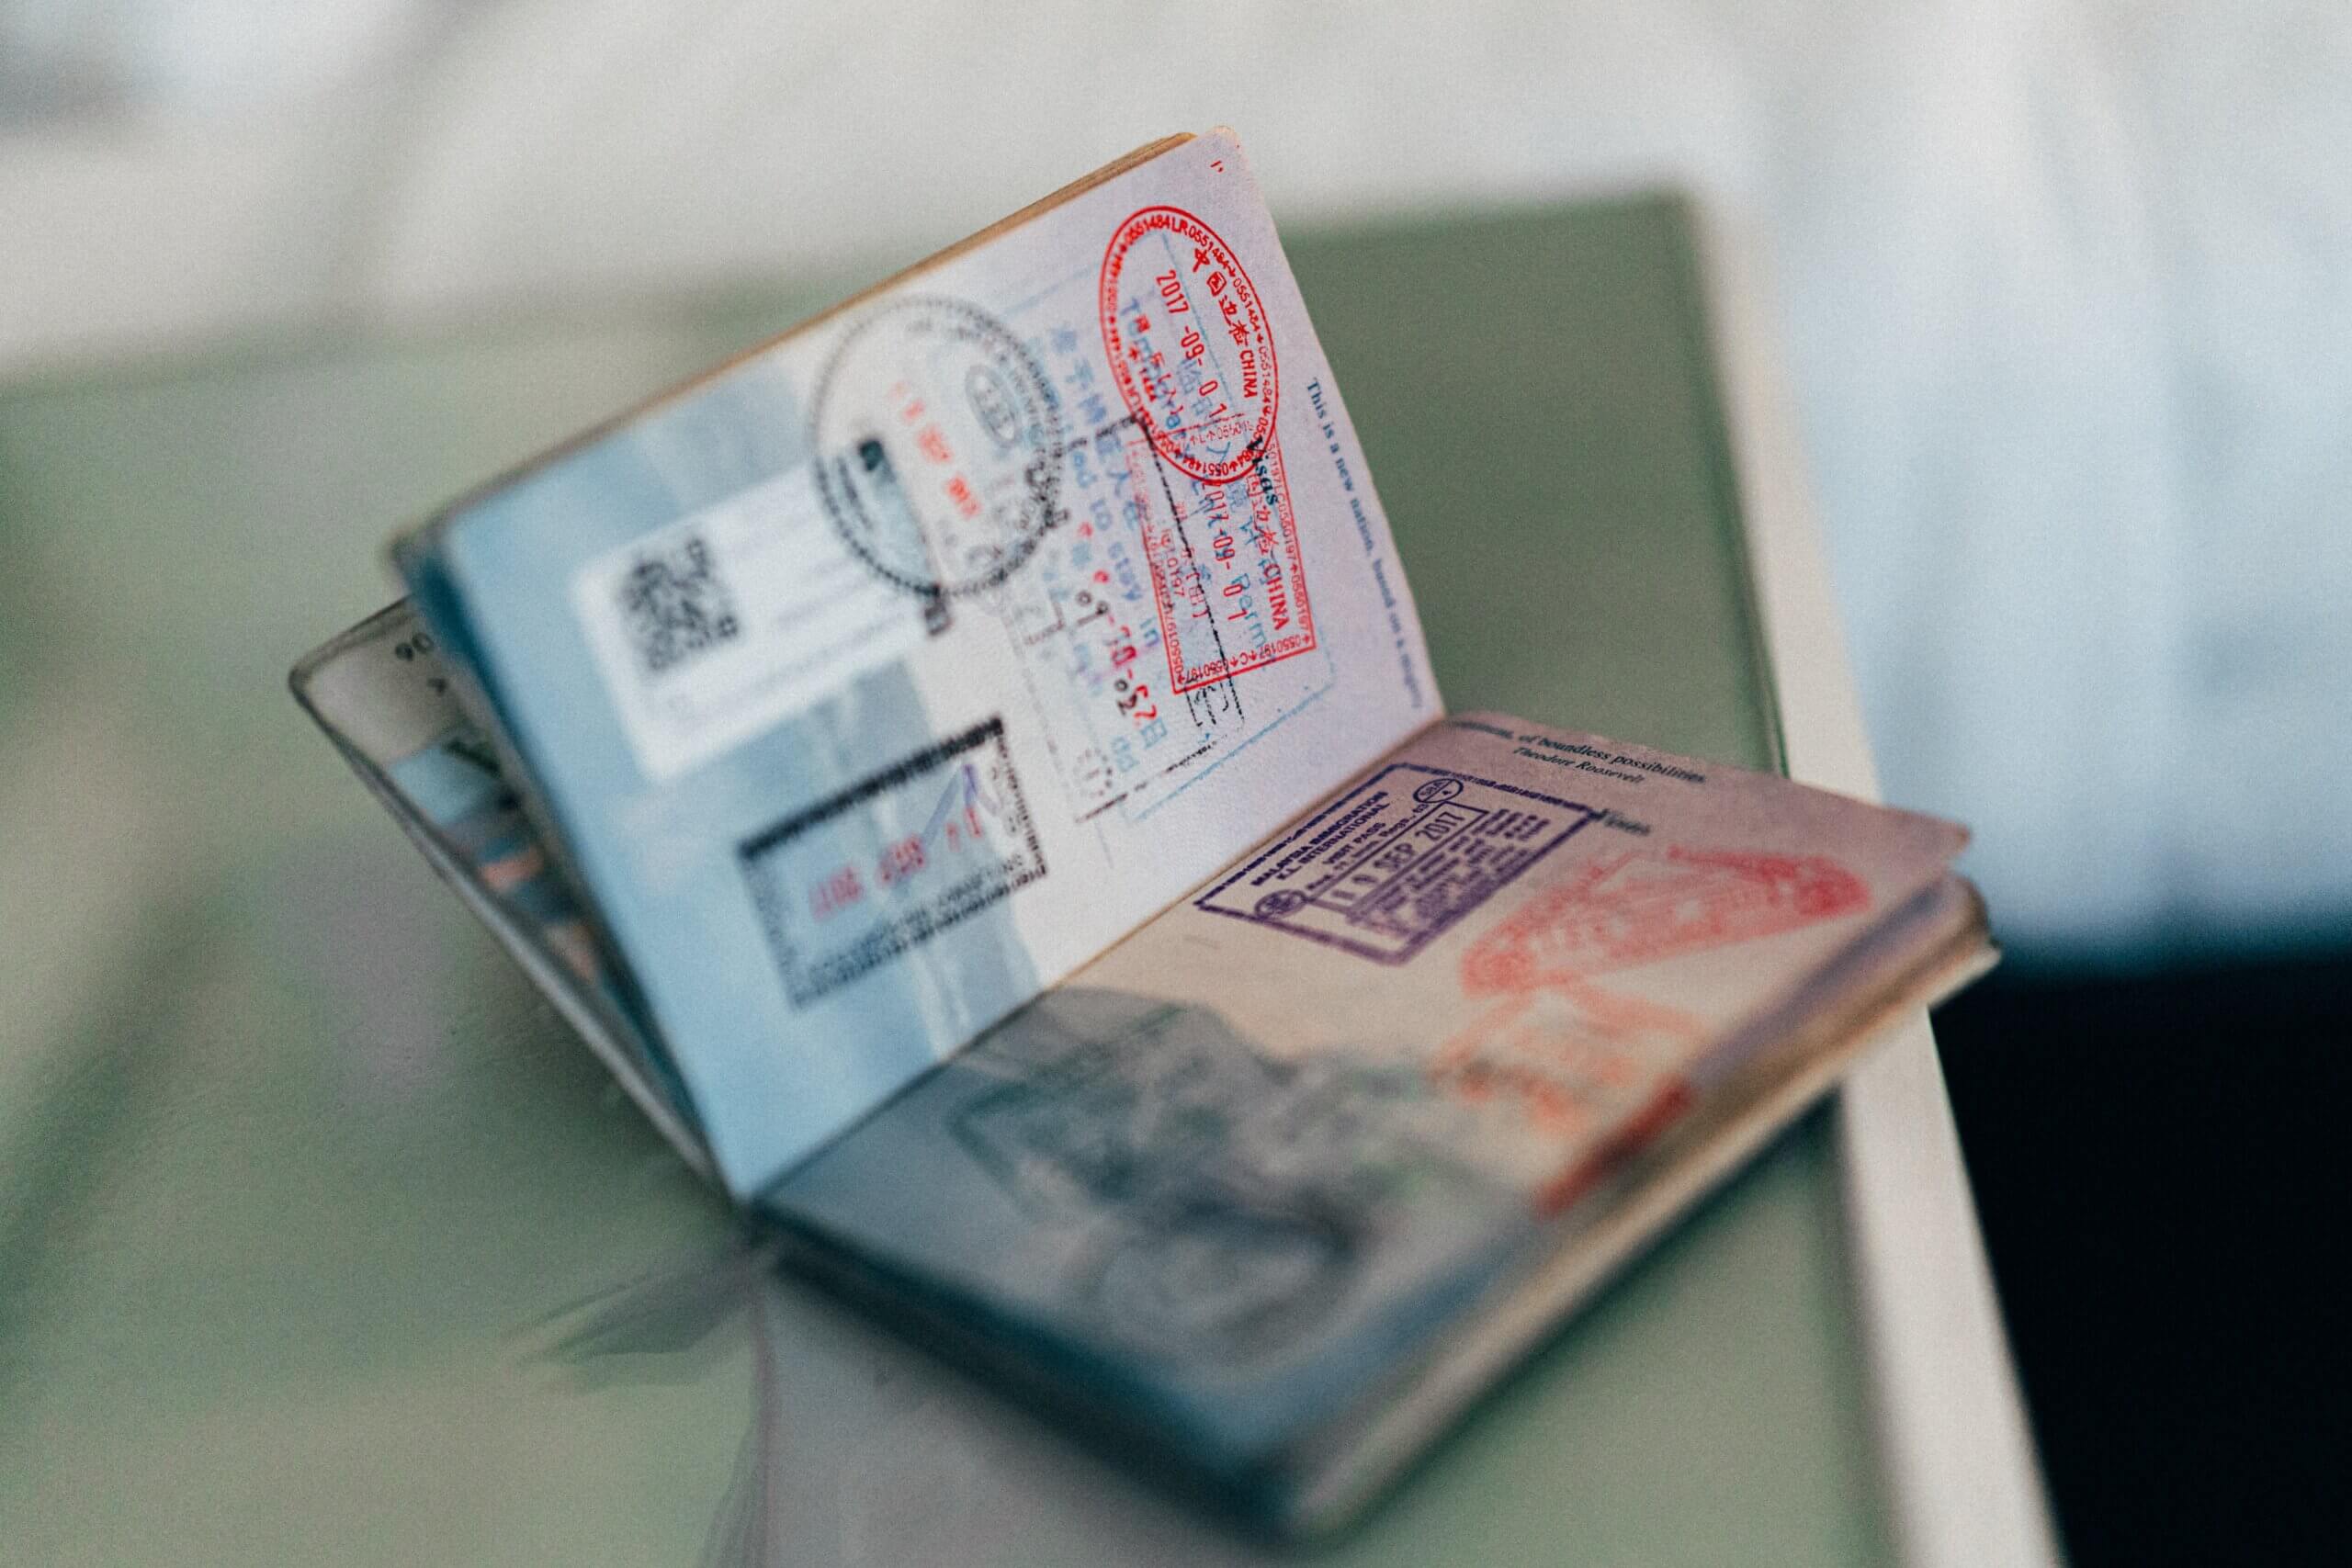 Passport - Photo by ConvertKit on Unsplash